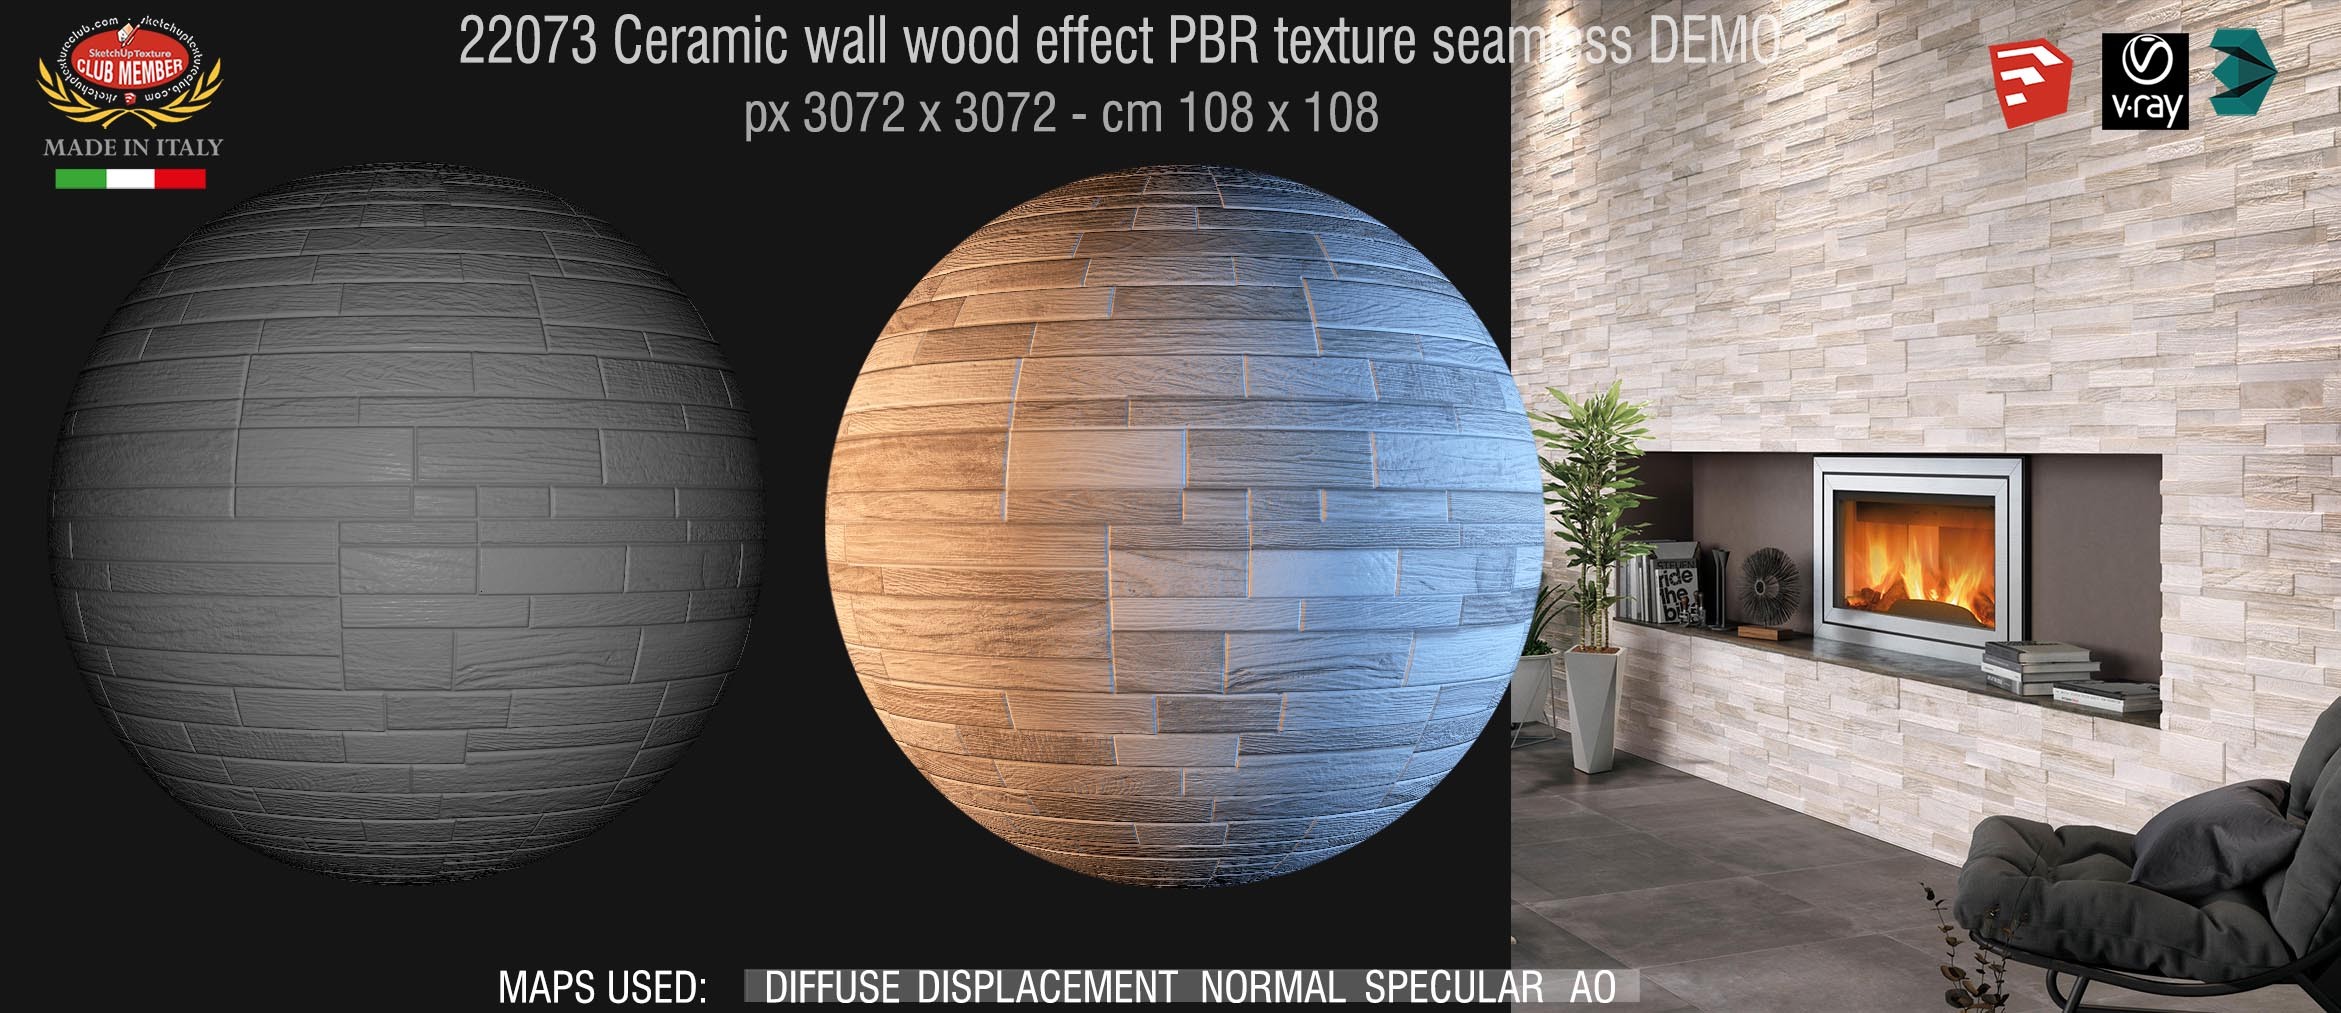 22073 Ceramic wall wood effect PBR texture seamless DEMO